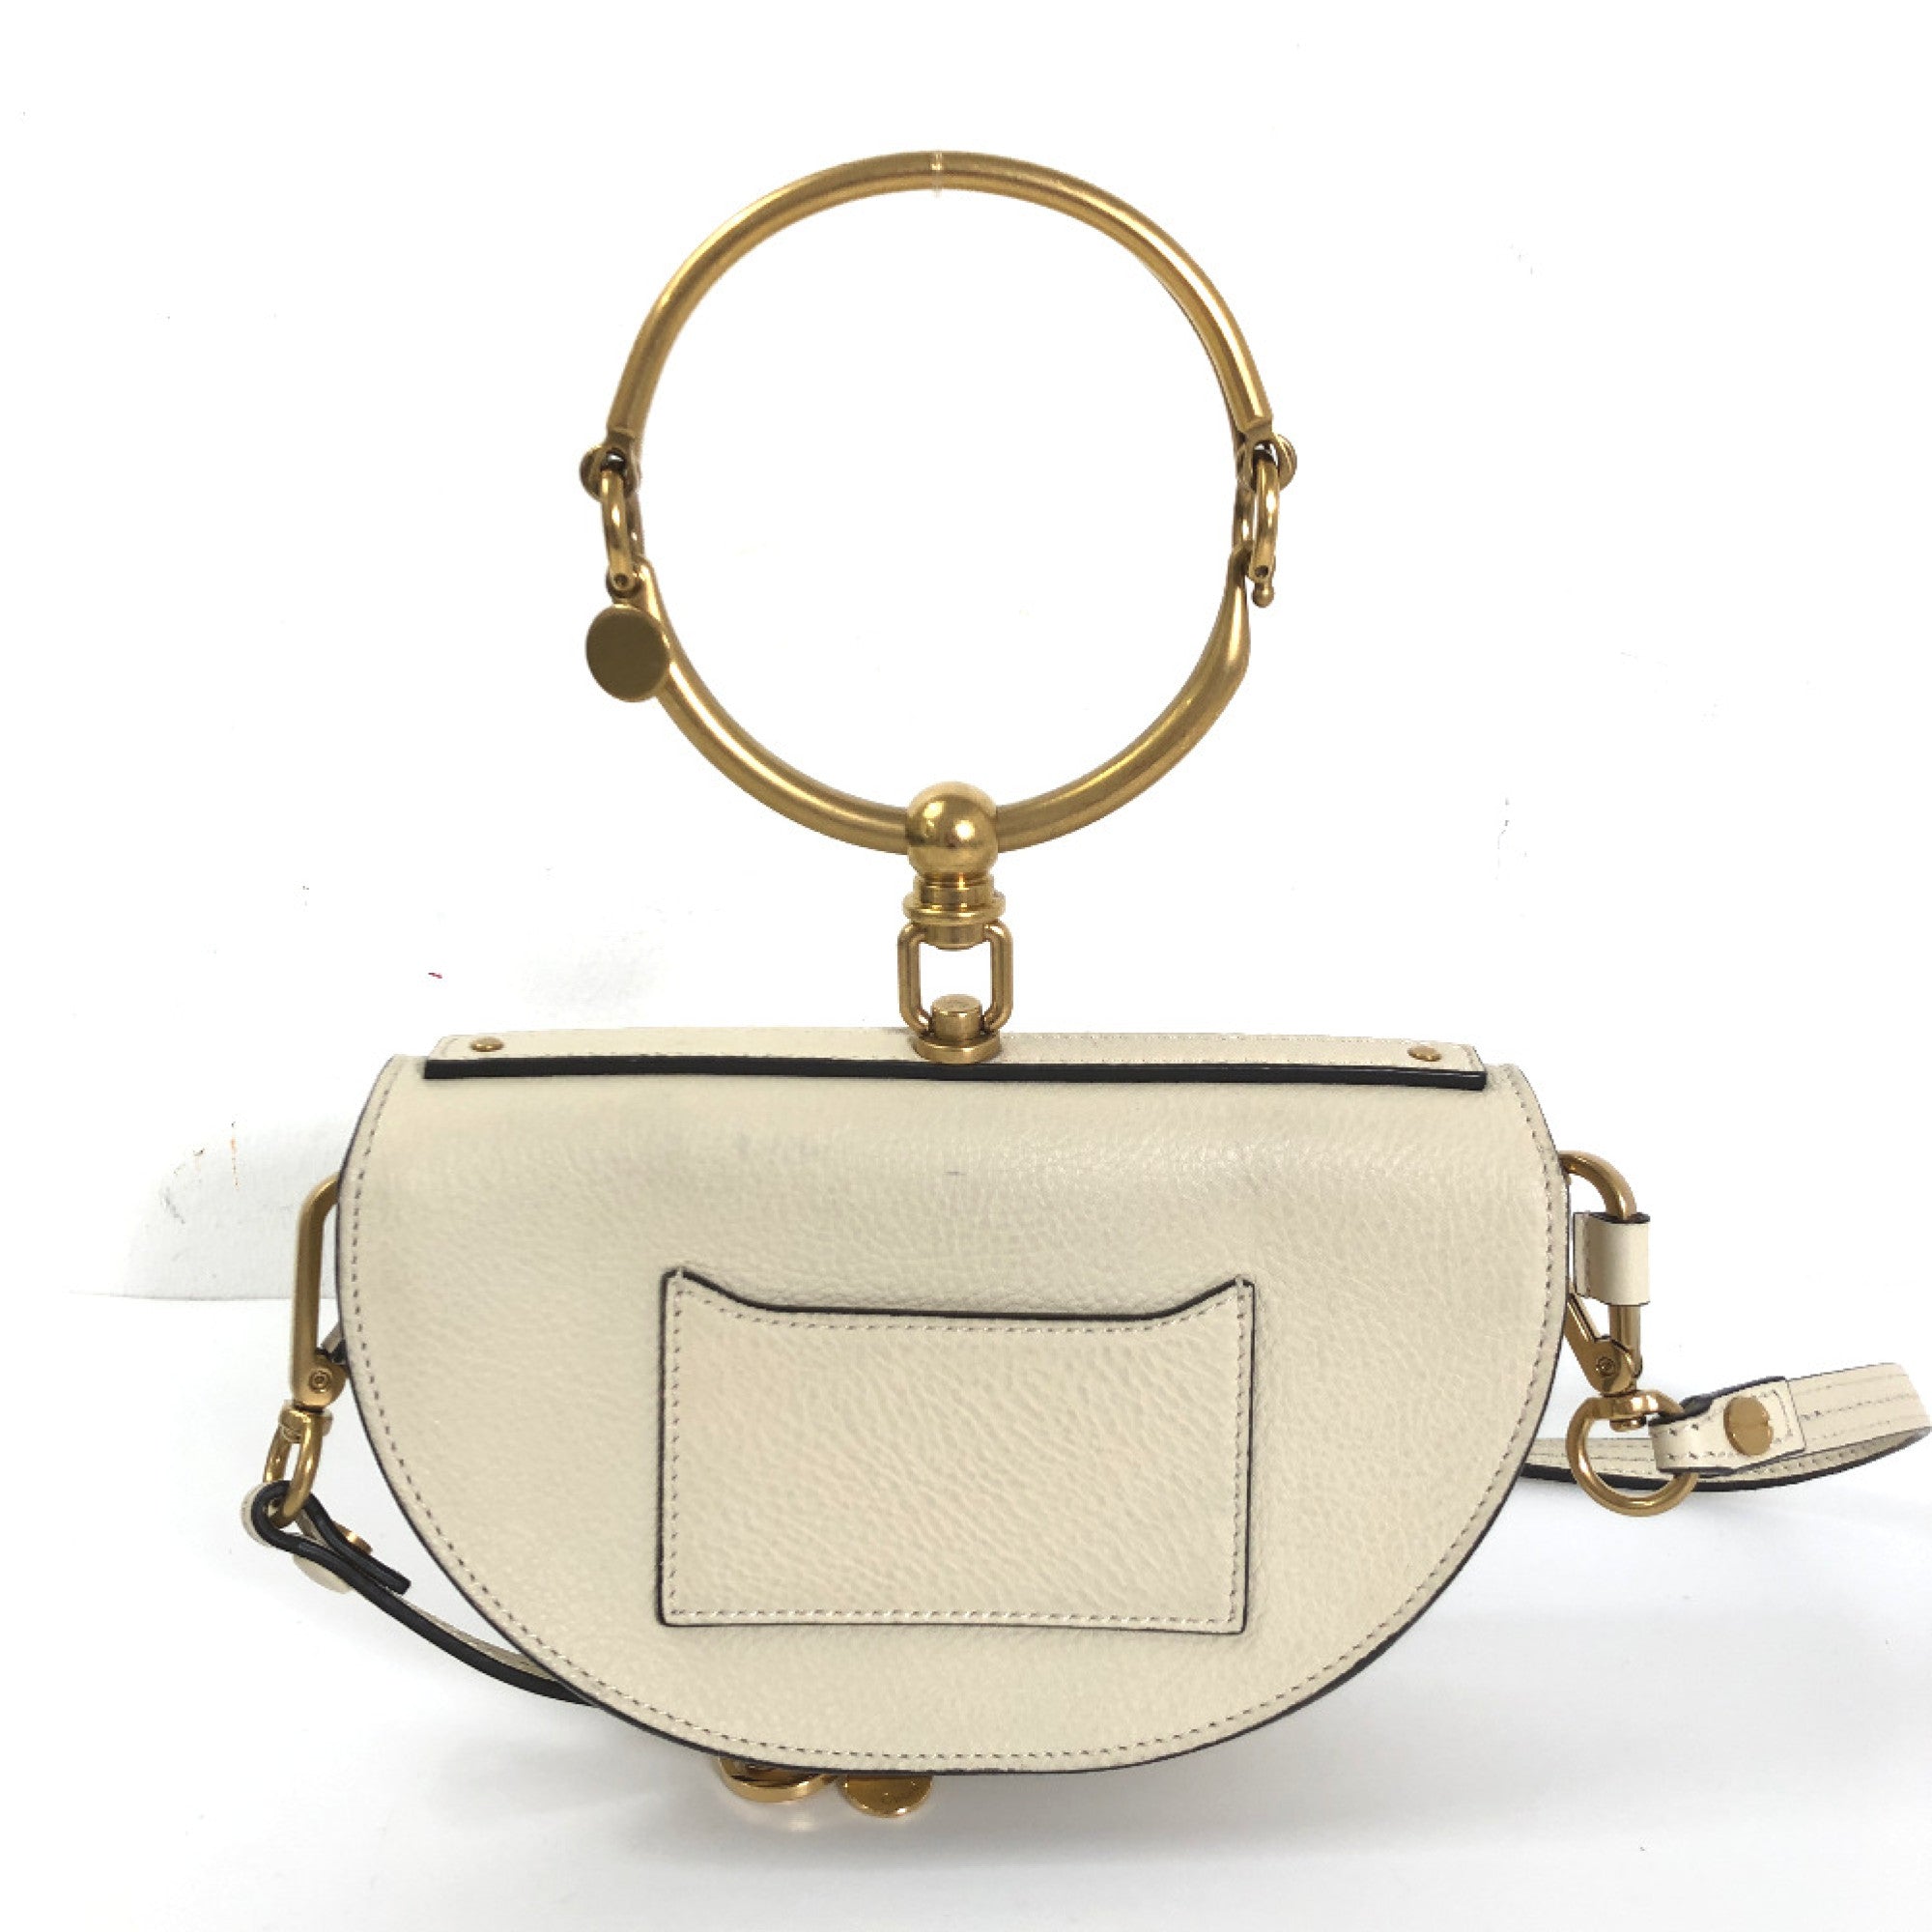 Chloé Small Nile Bracelet Bag